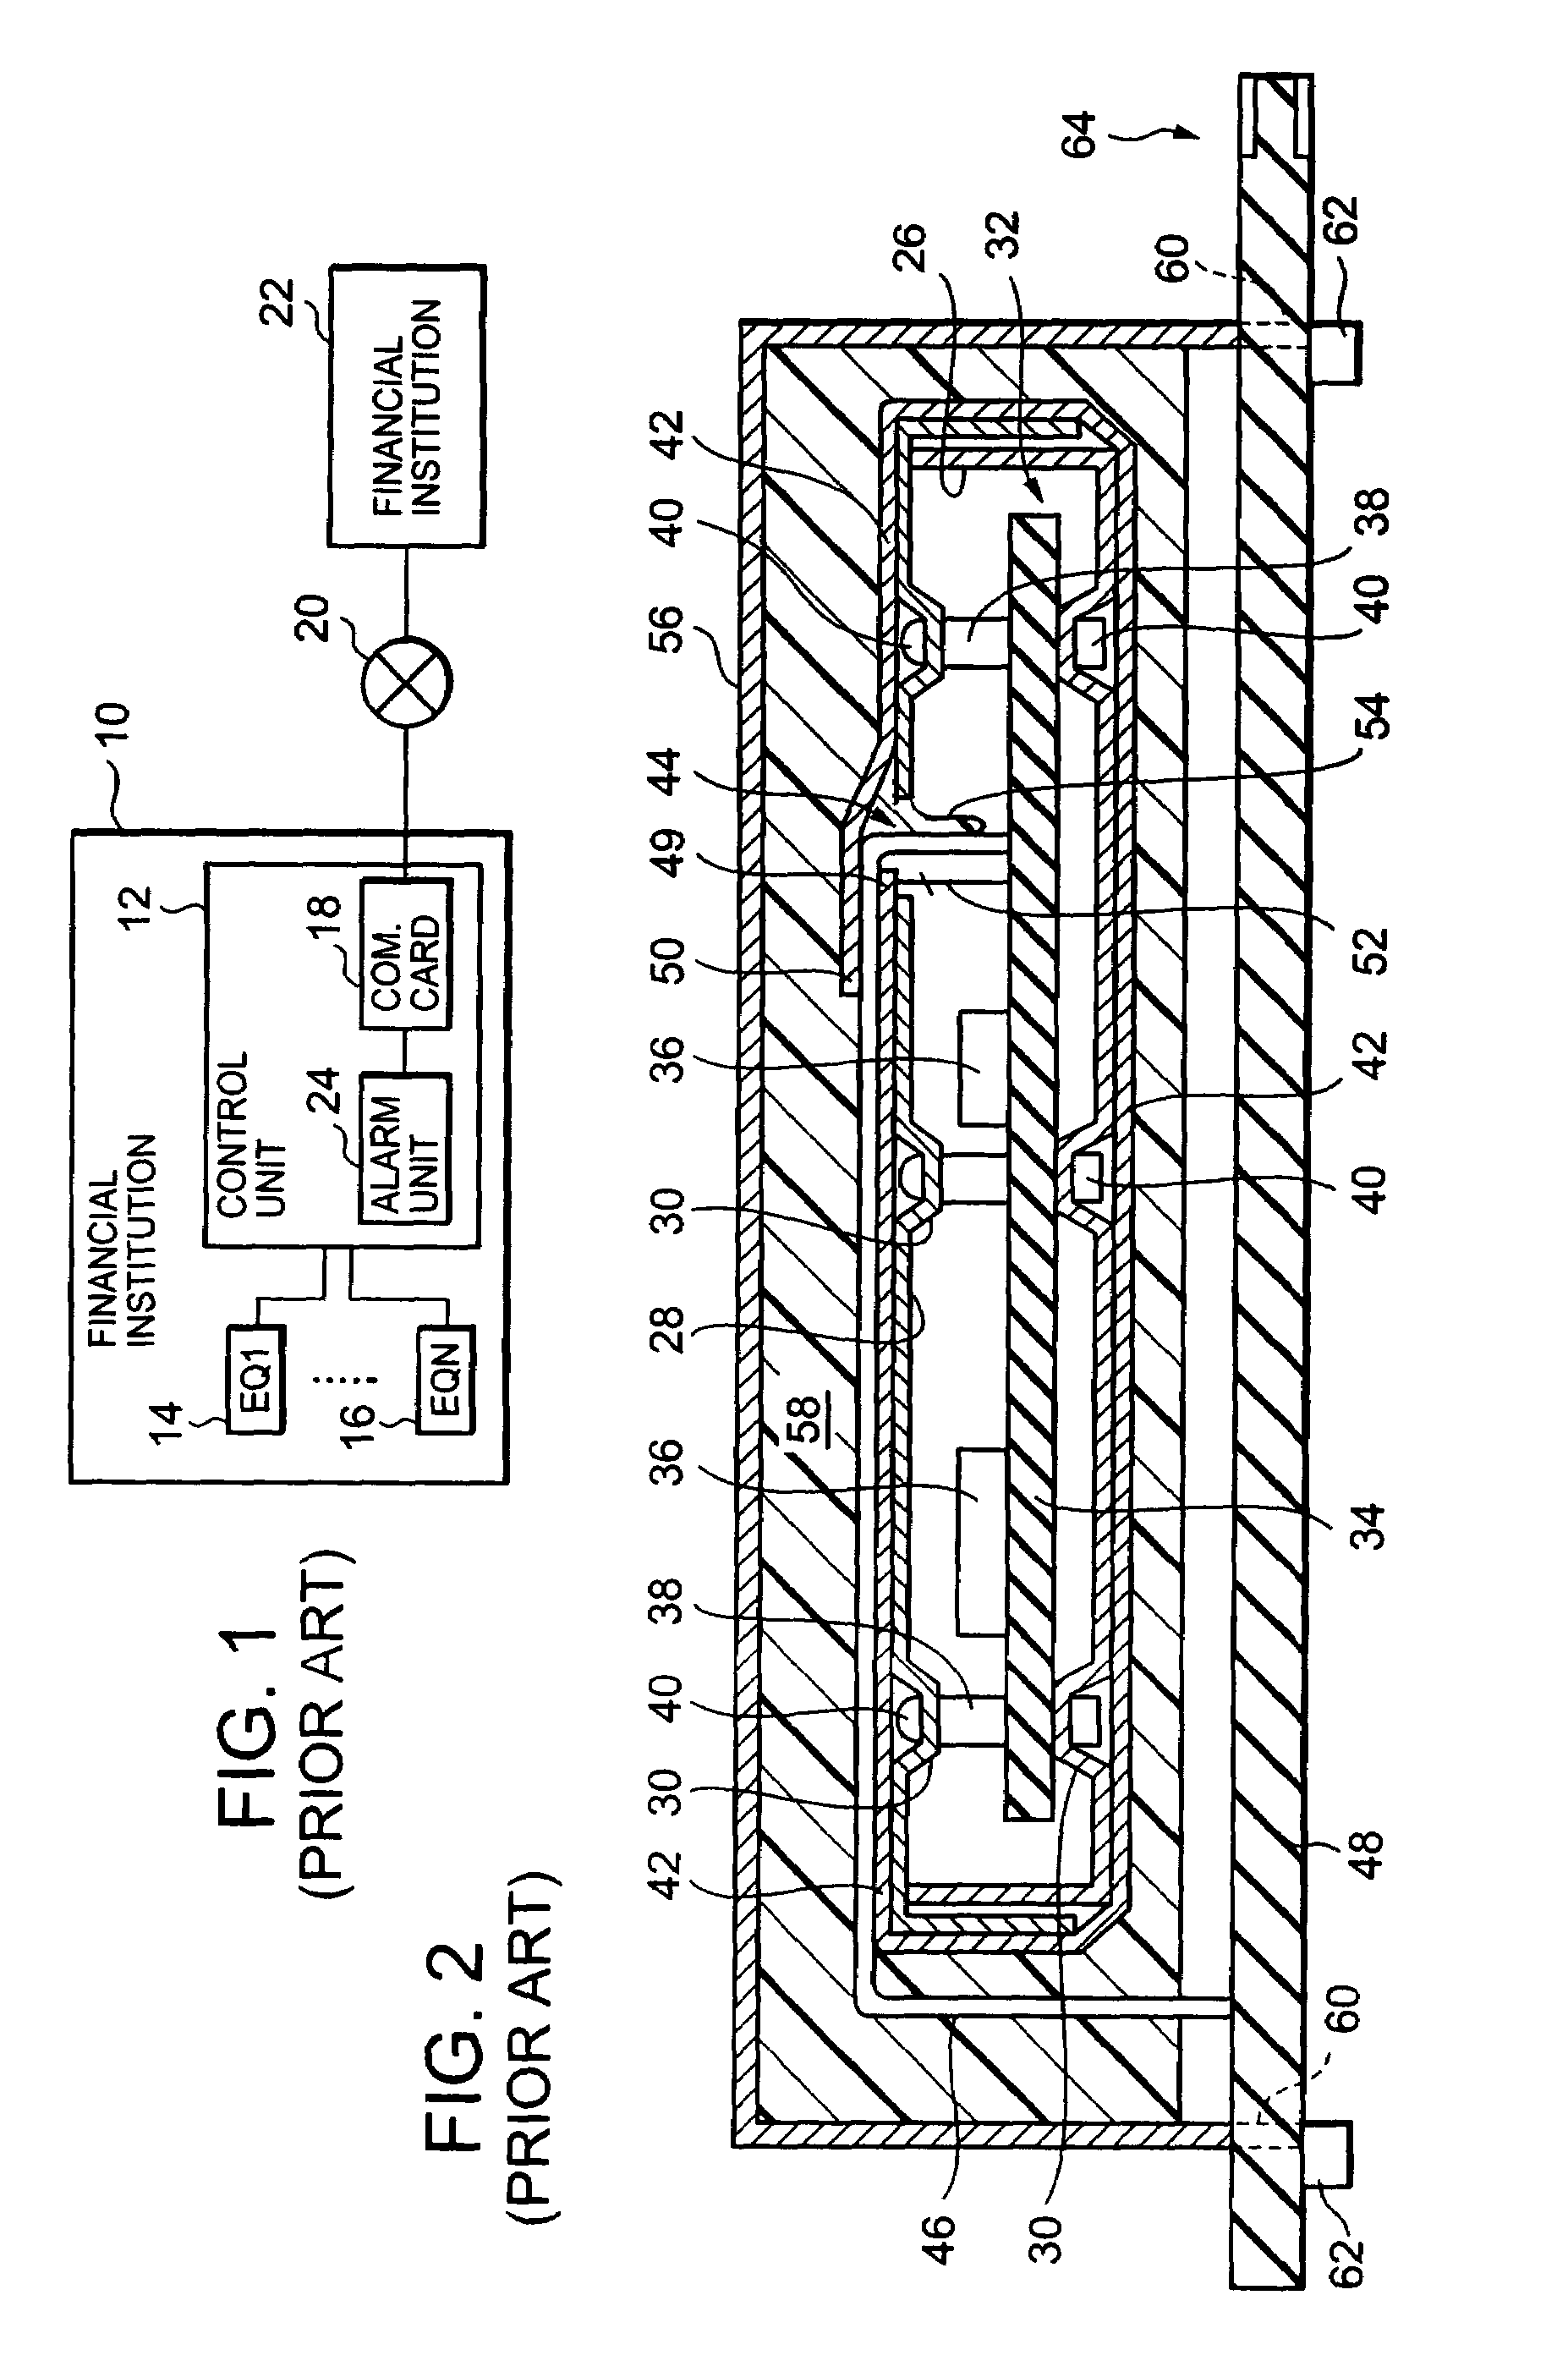 Tamper-proof enclosure for a circuit card